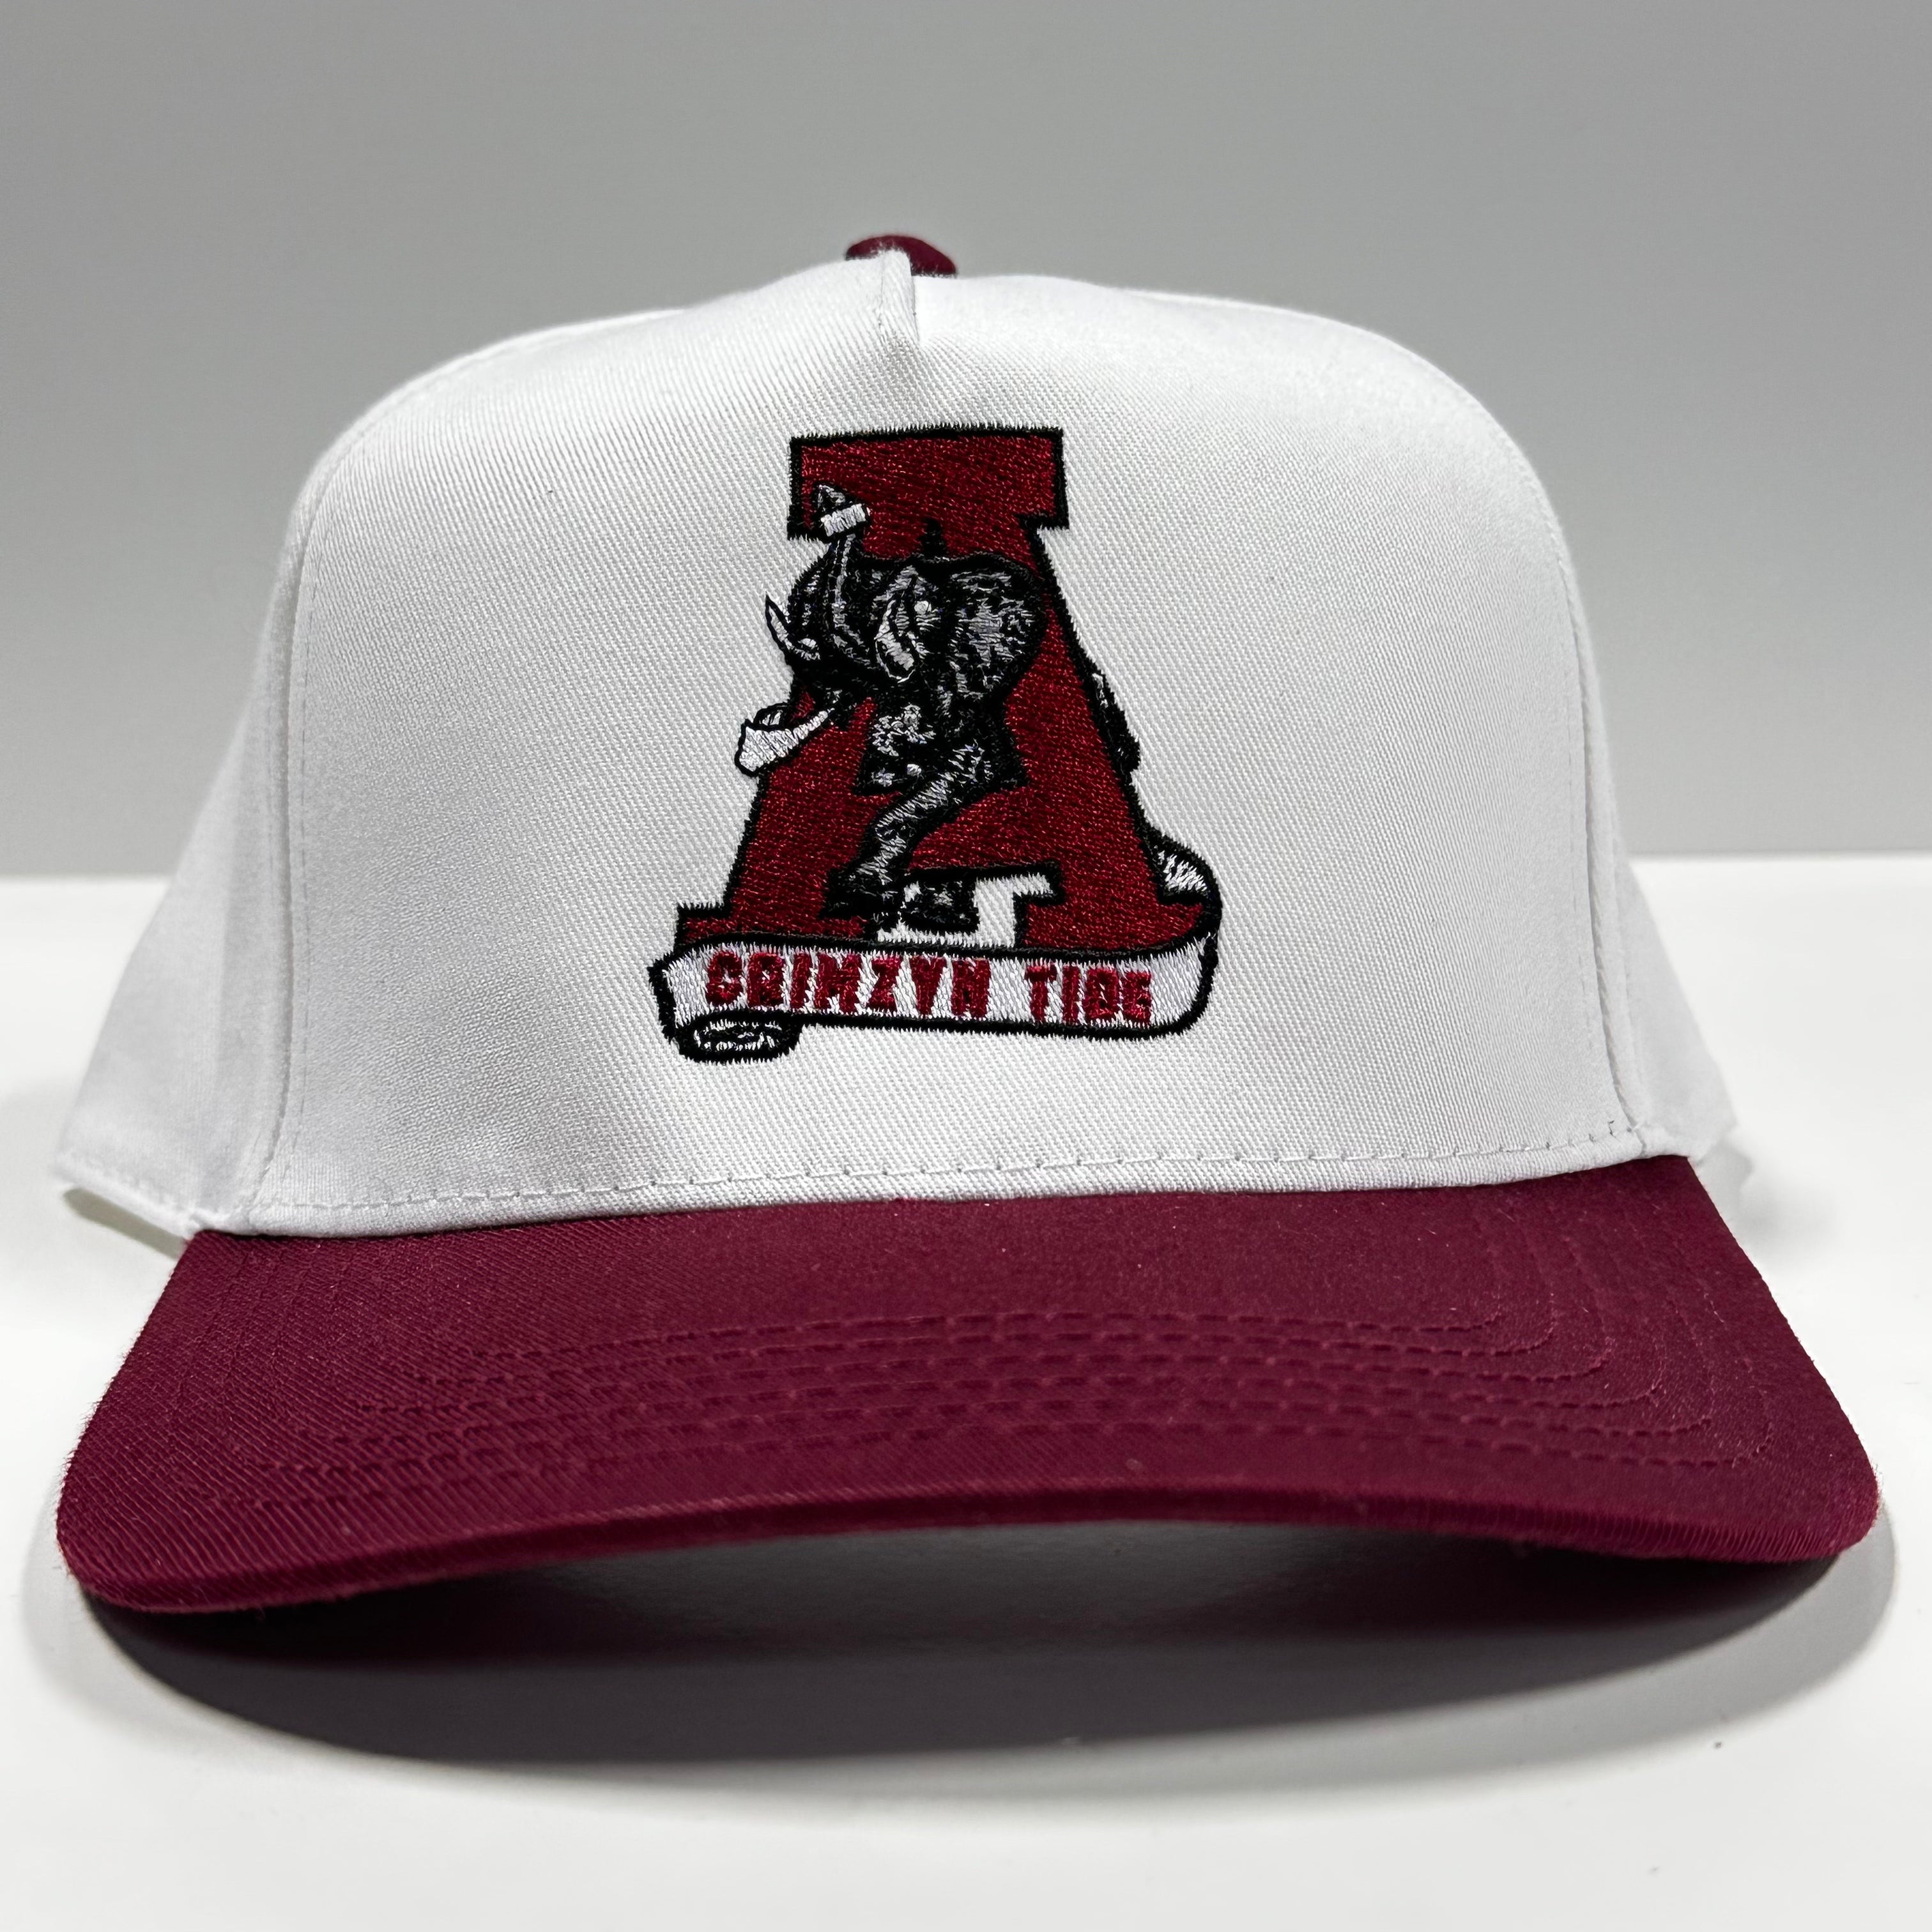 University of Alabama Hat, Snapback, Alabama Crimson Tide Caps